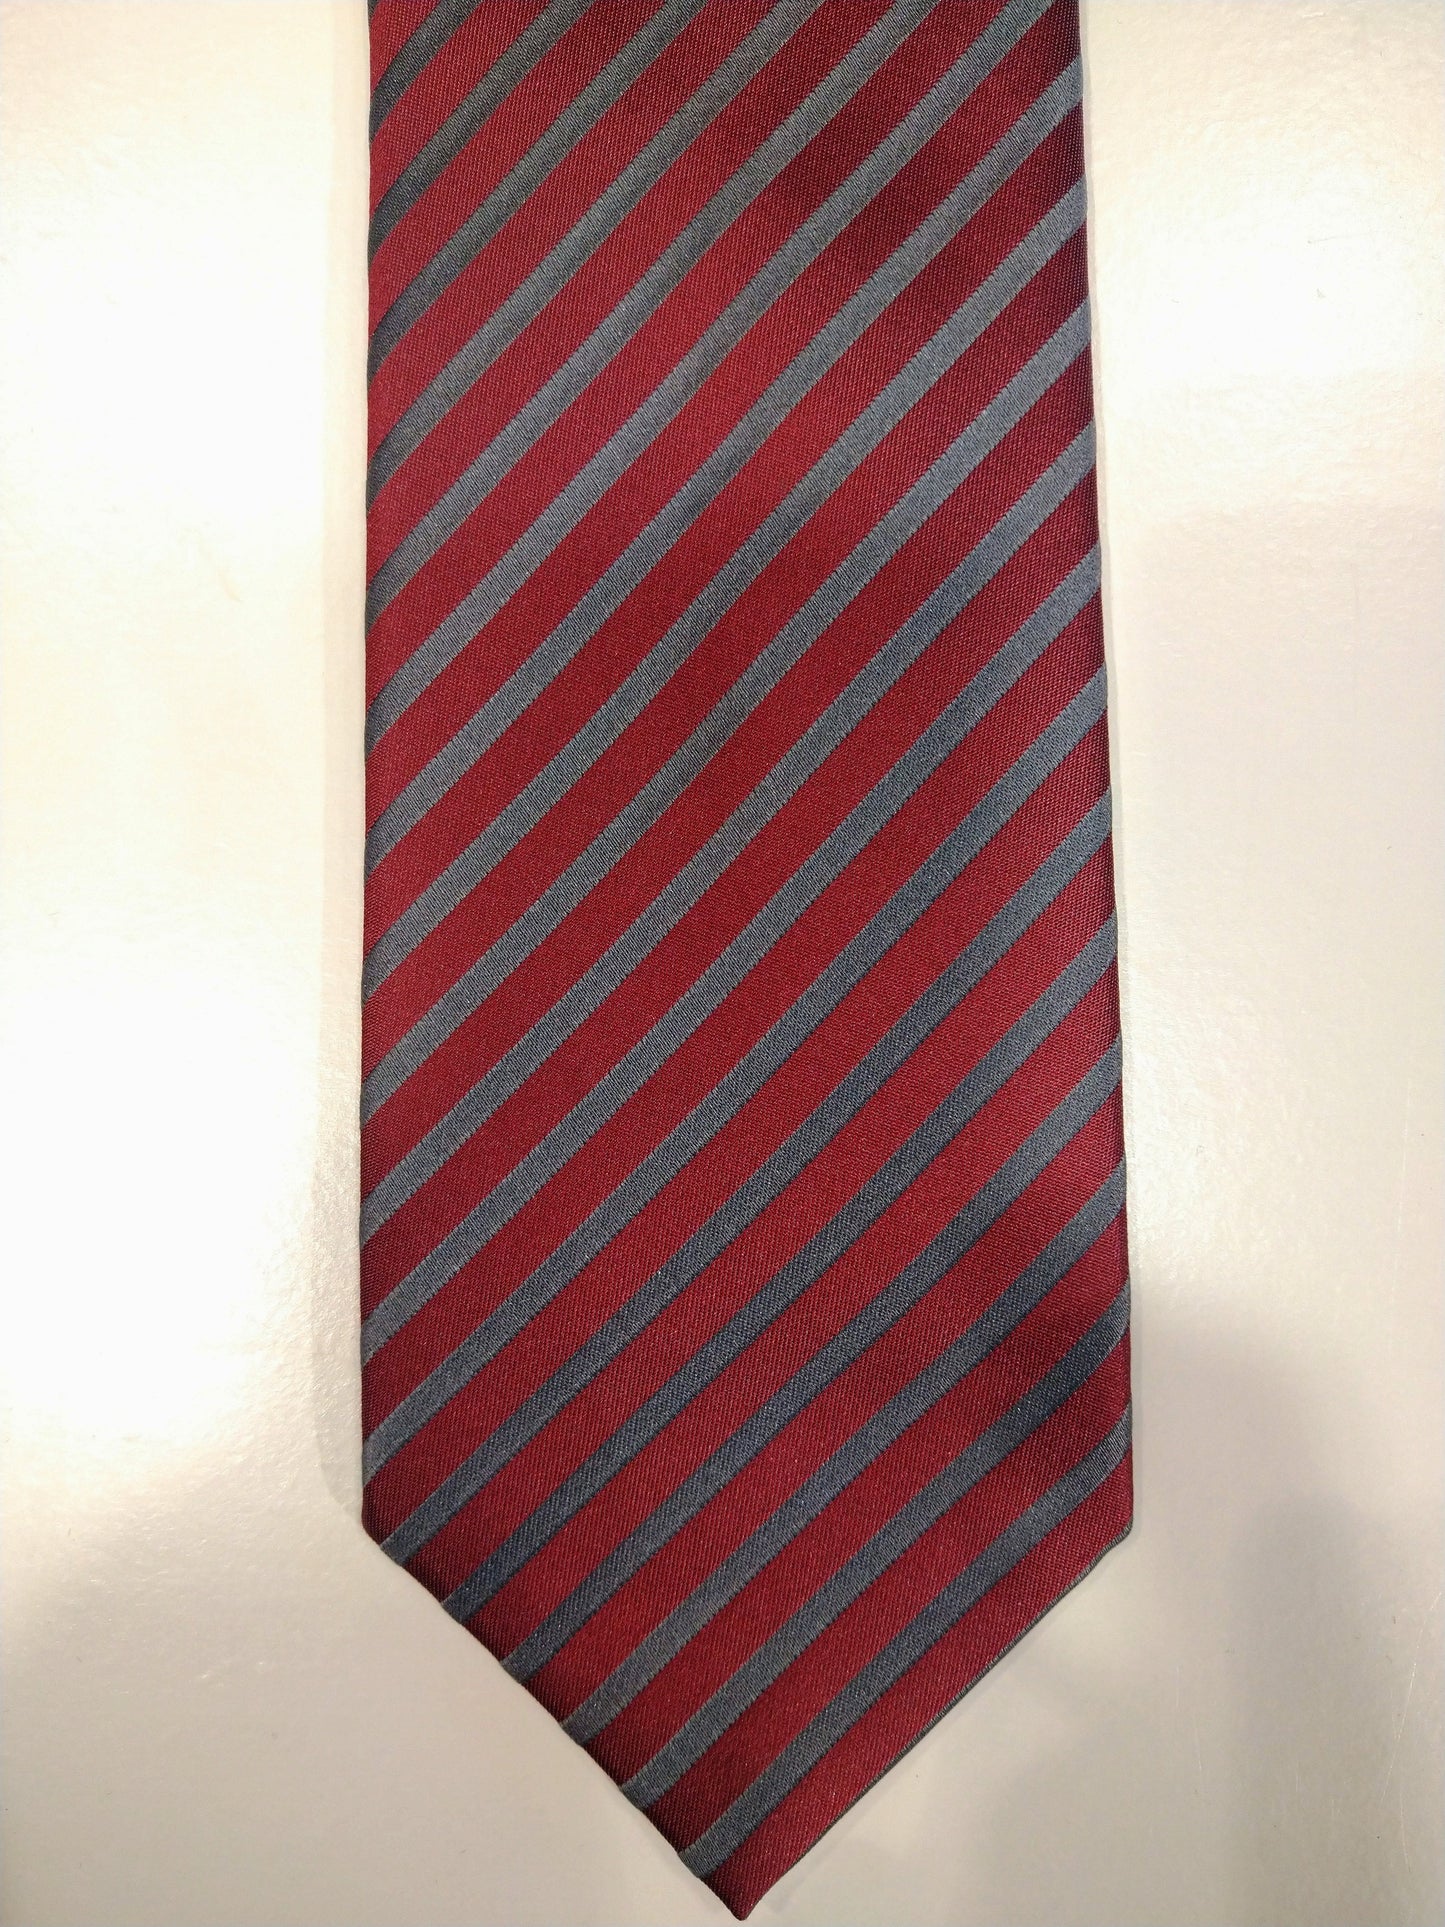 Olymp Silk Tie. Pink / gray striped.